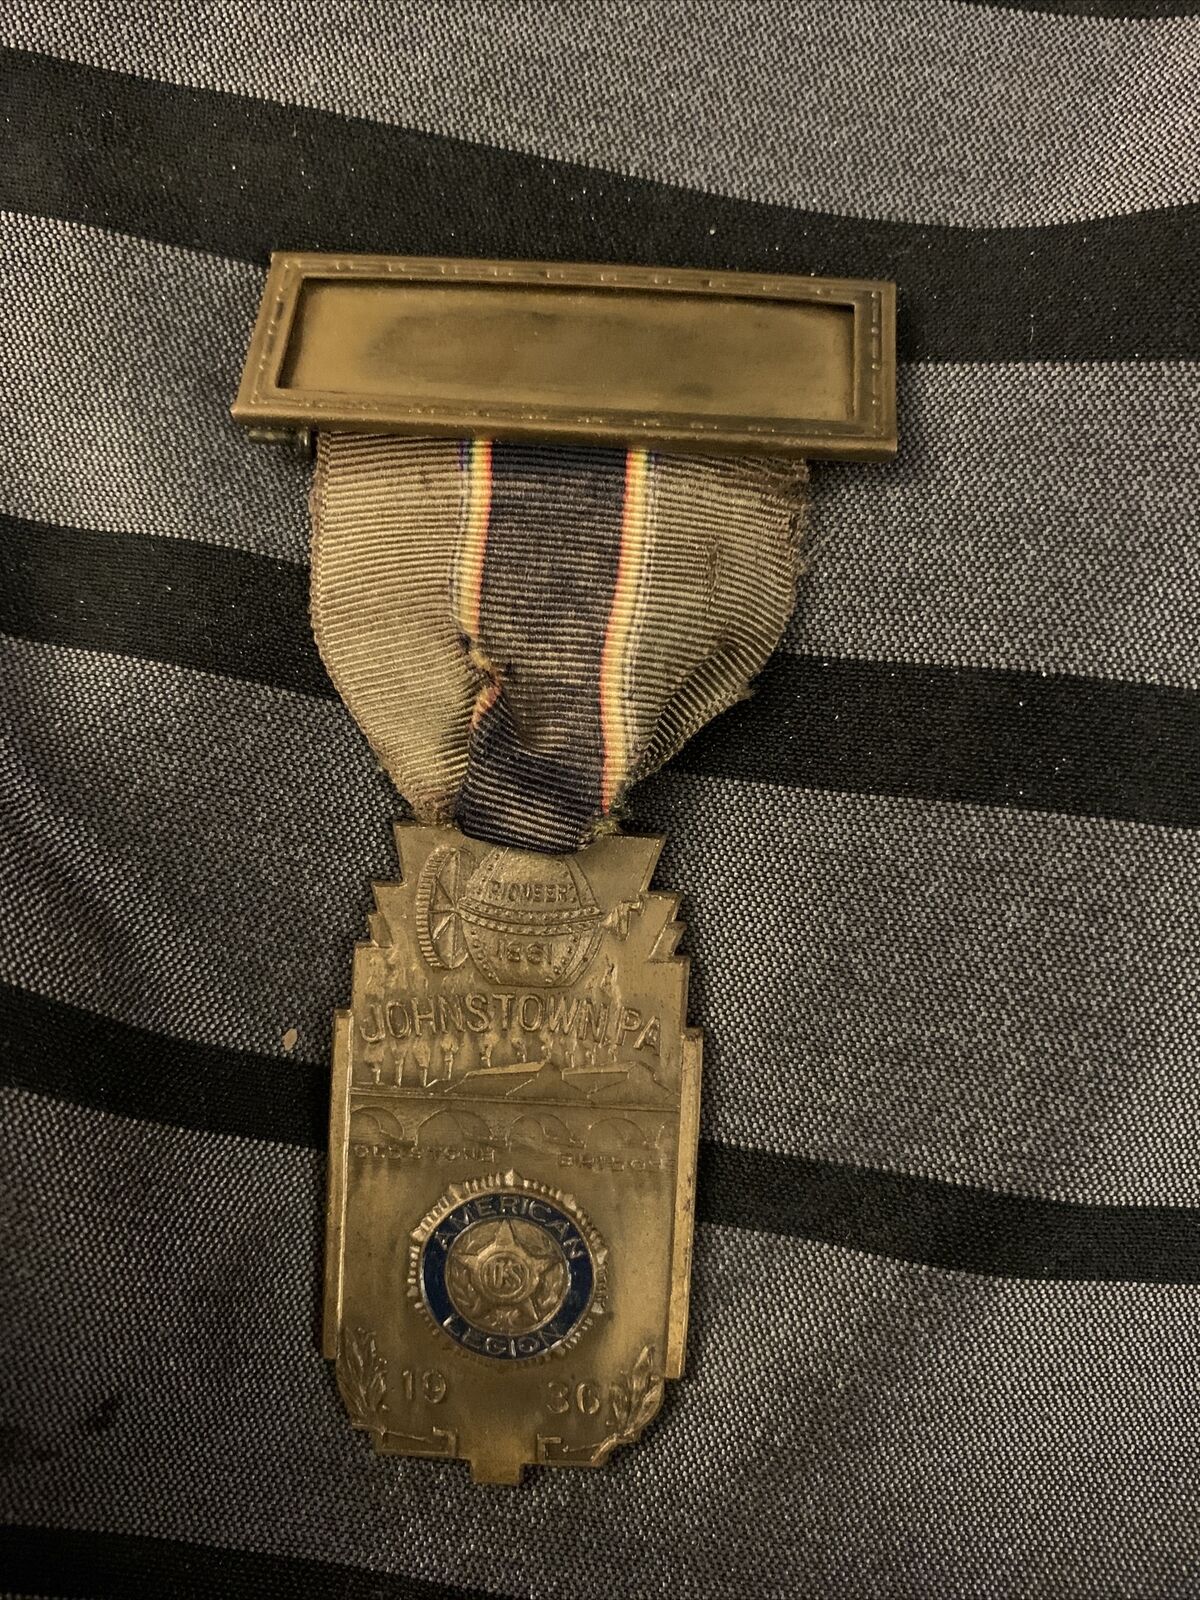 1936 american legion medal Johnston Pa 18th Penna Convention 